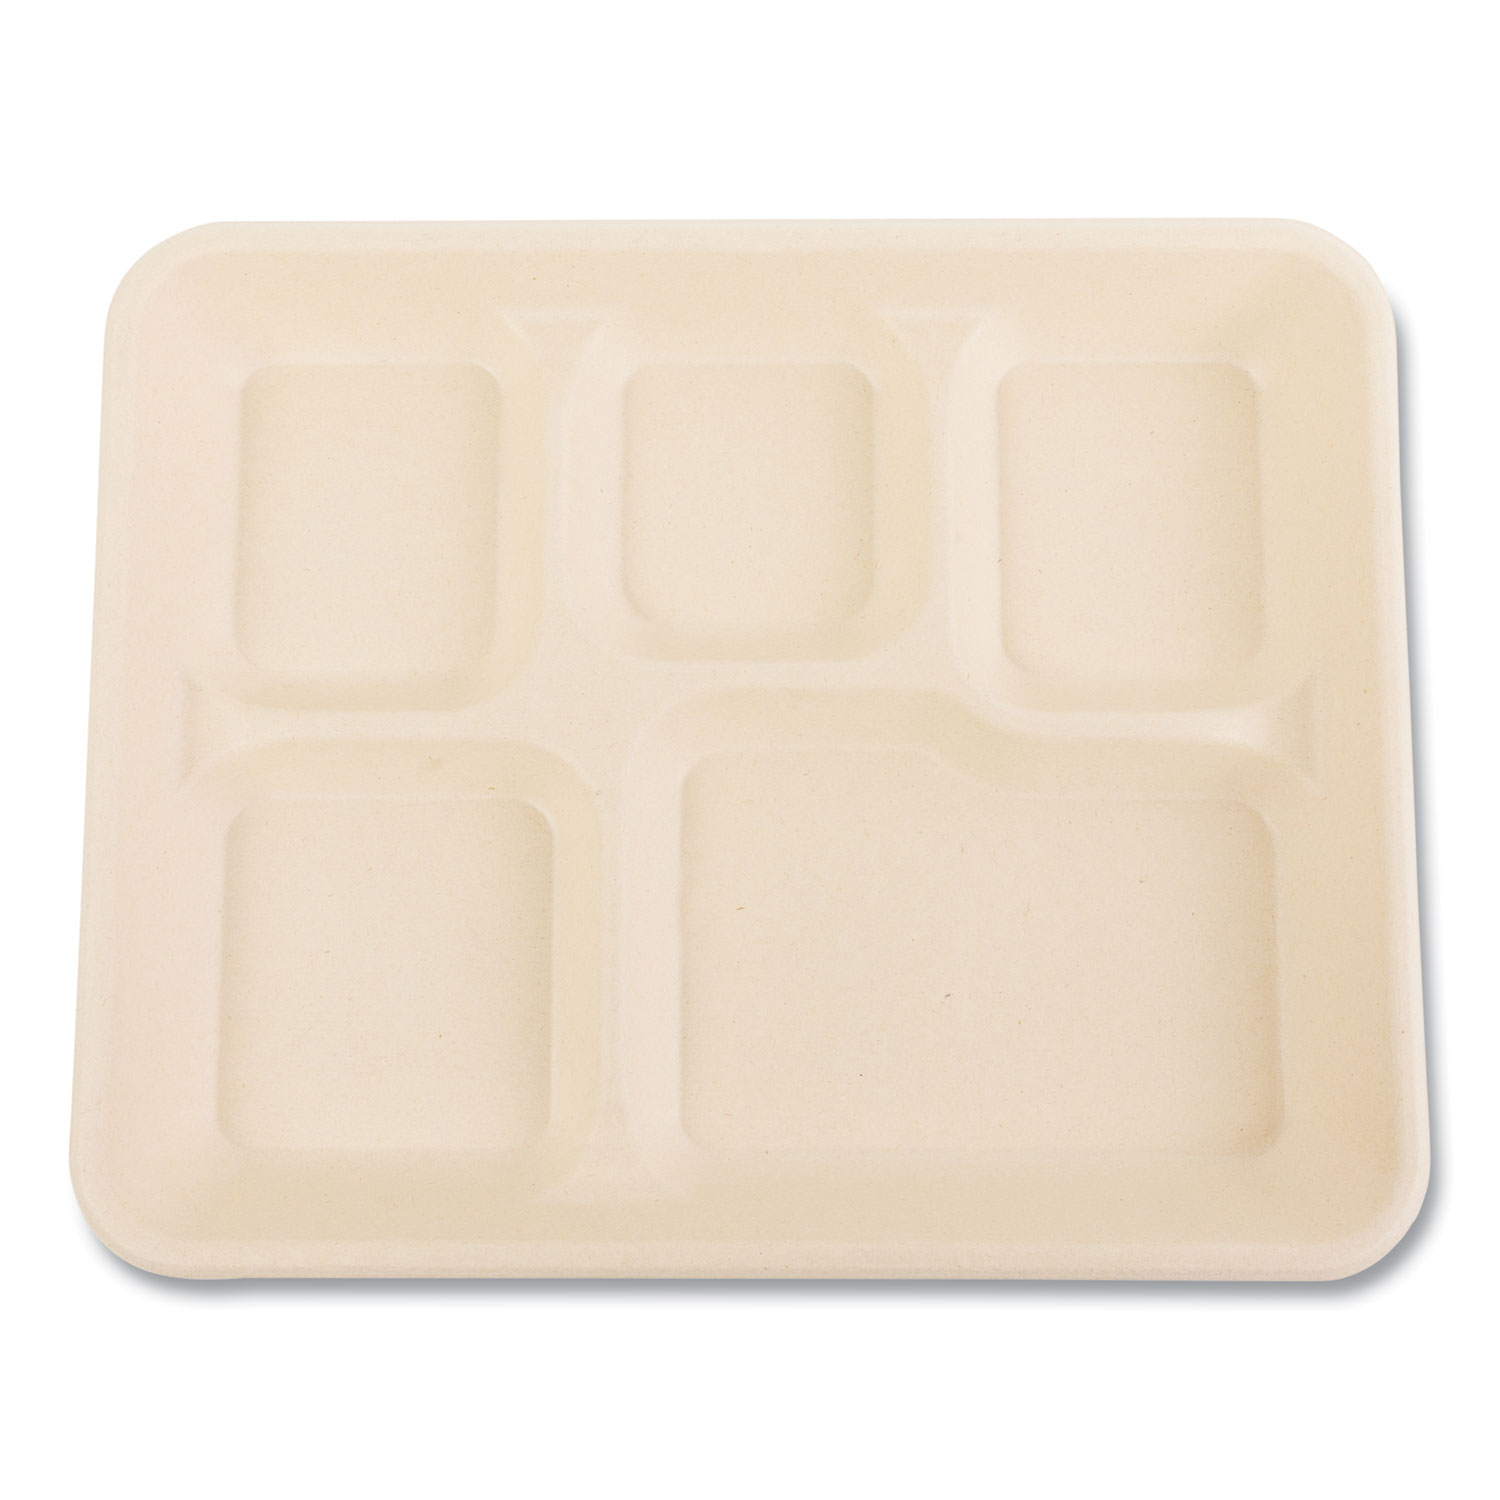 Bagasse PFAS-Free Food Tray, 5-Compartment, 8.26 x 0.98 x 10.9